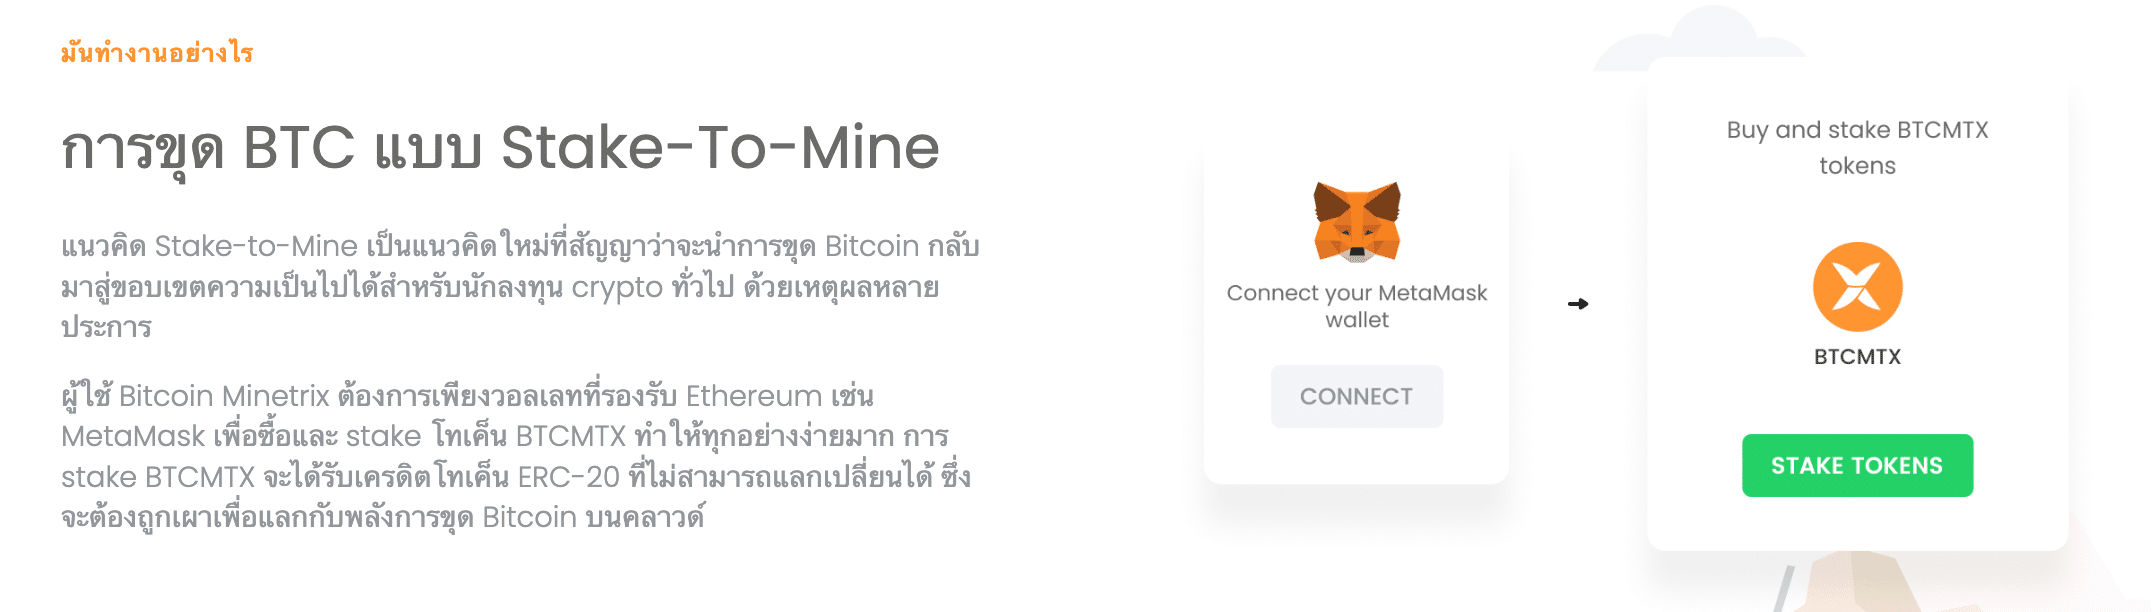 Bitcoin Minetrix stake to mine